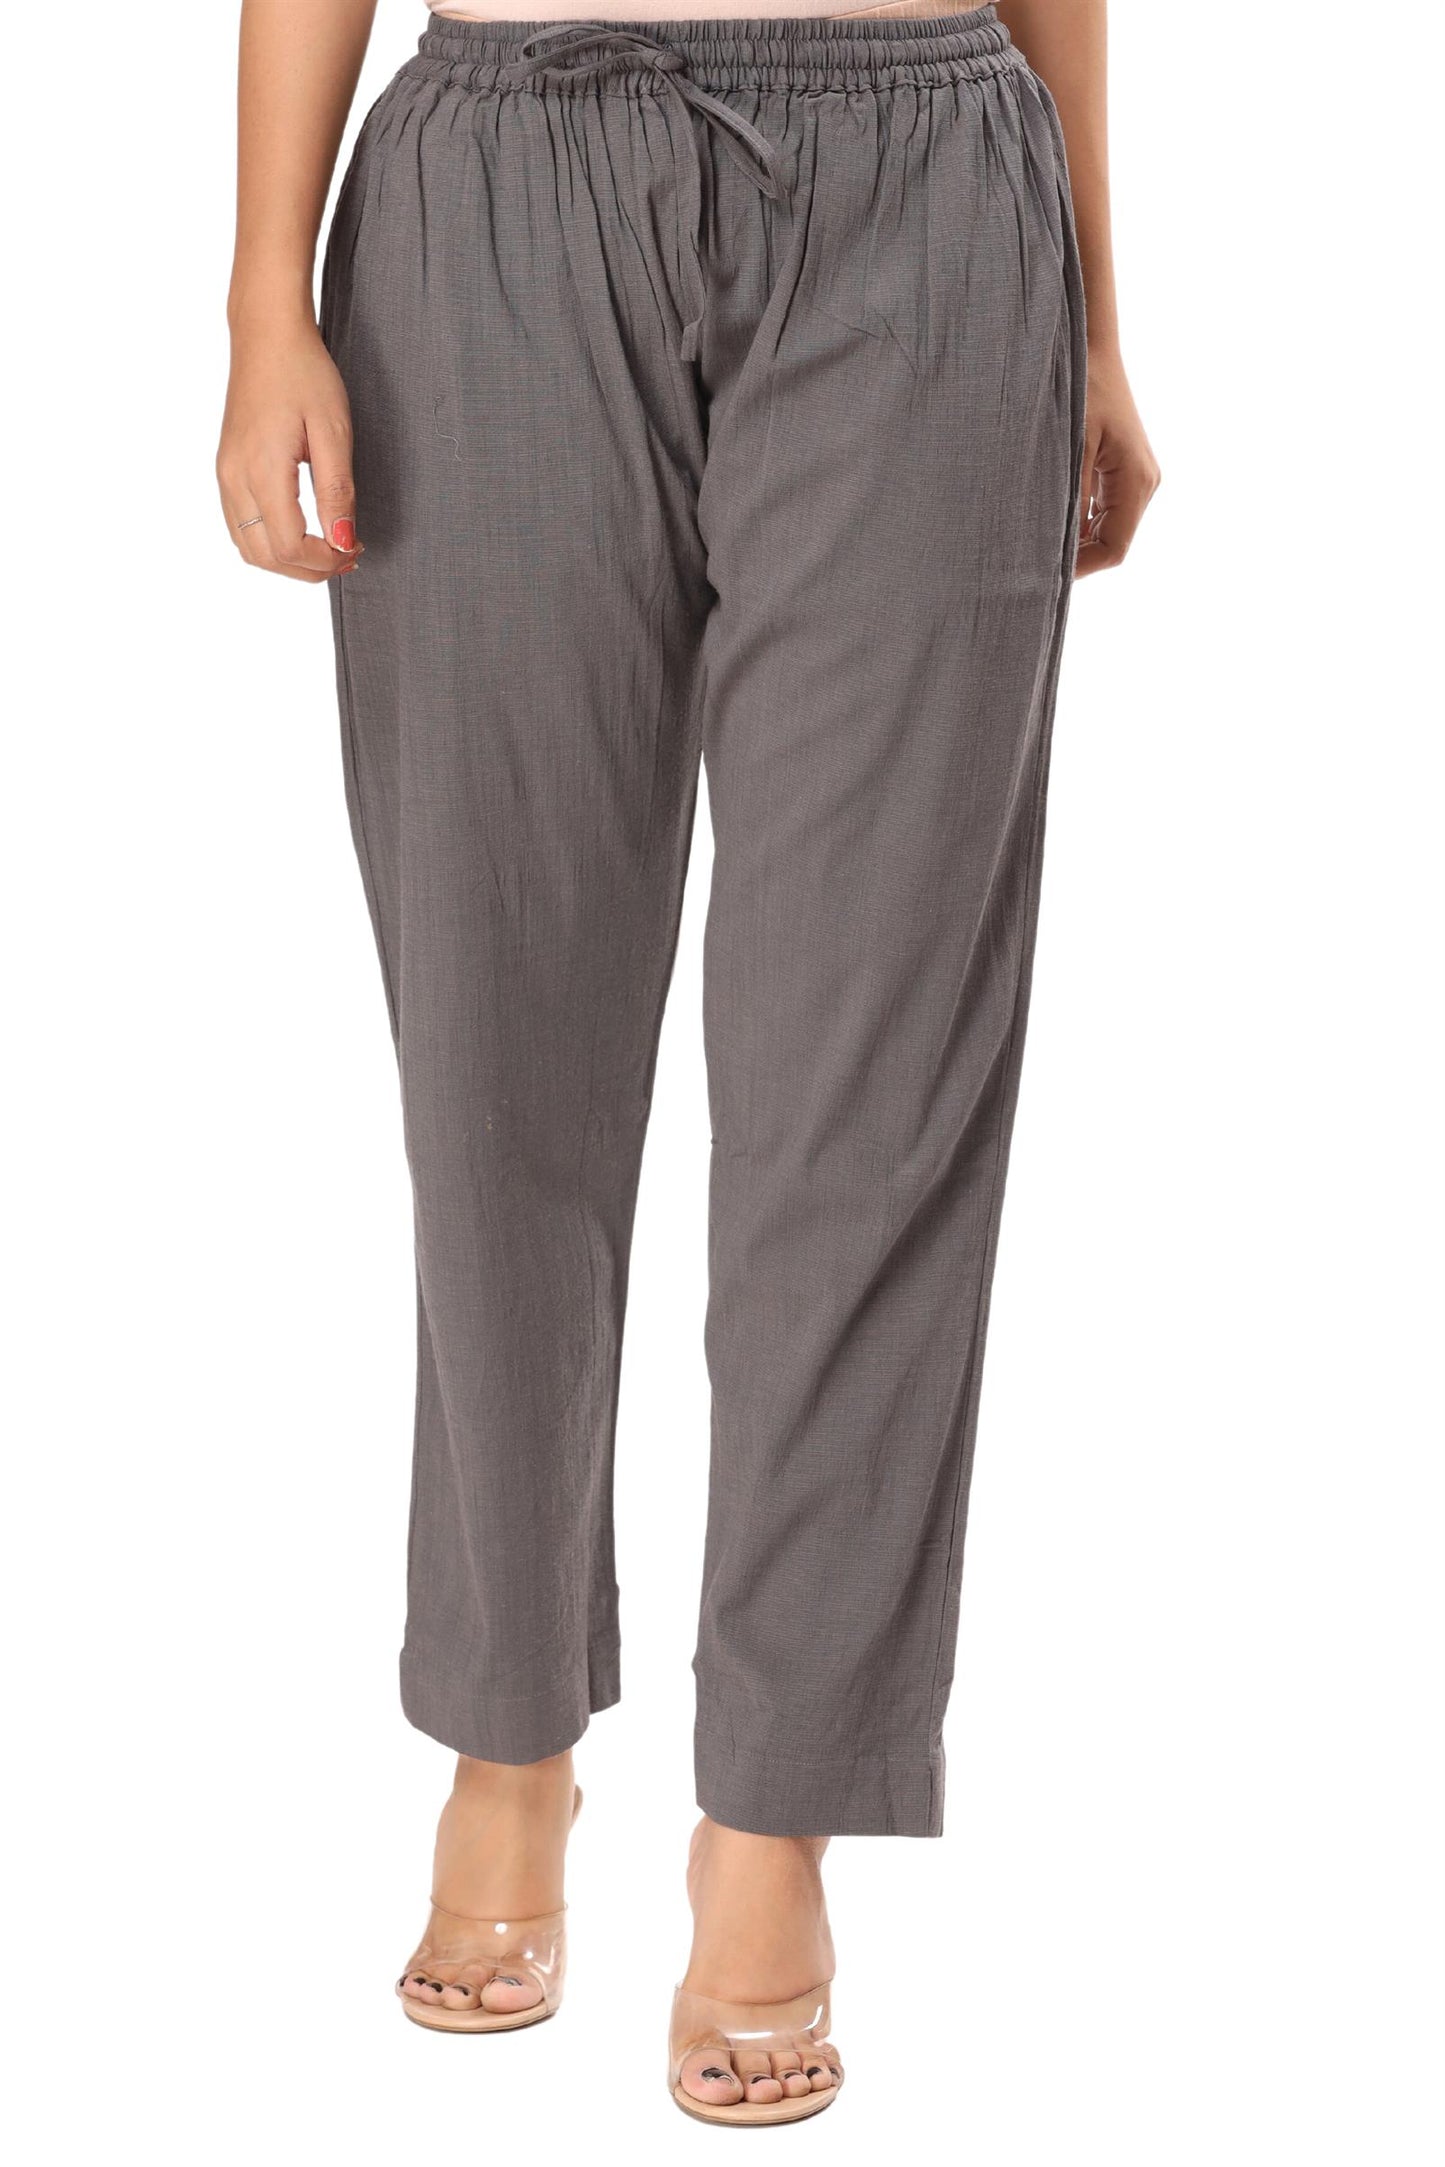 2-way stretch Grey Cotton Lycra Pants